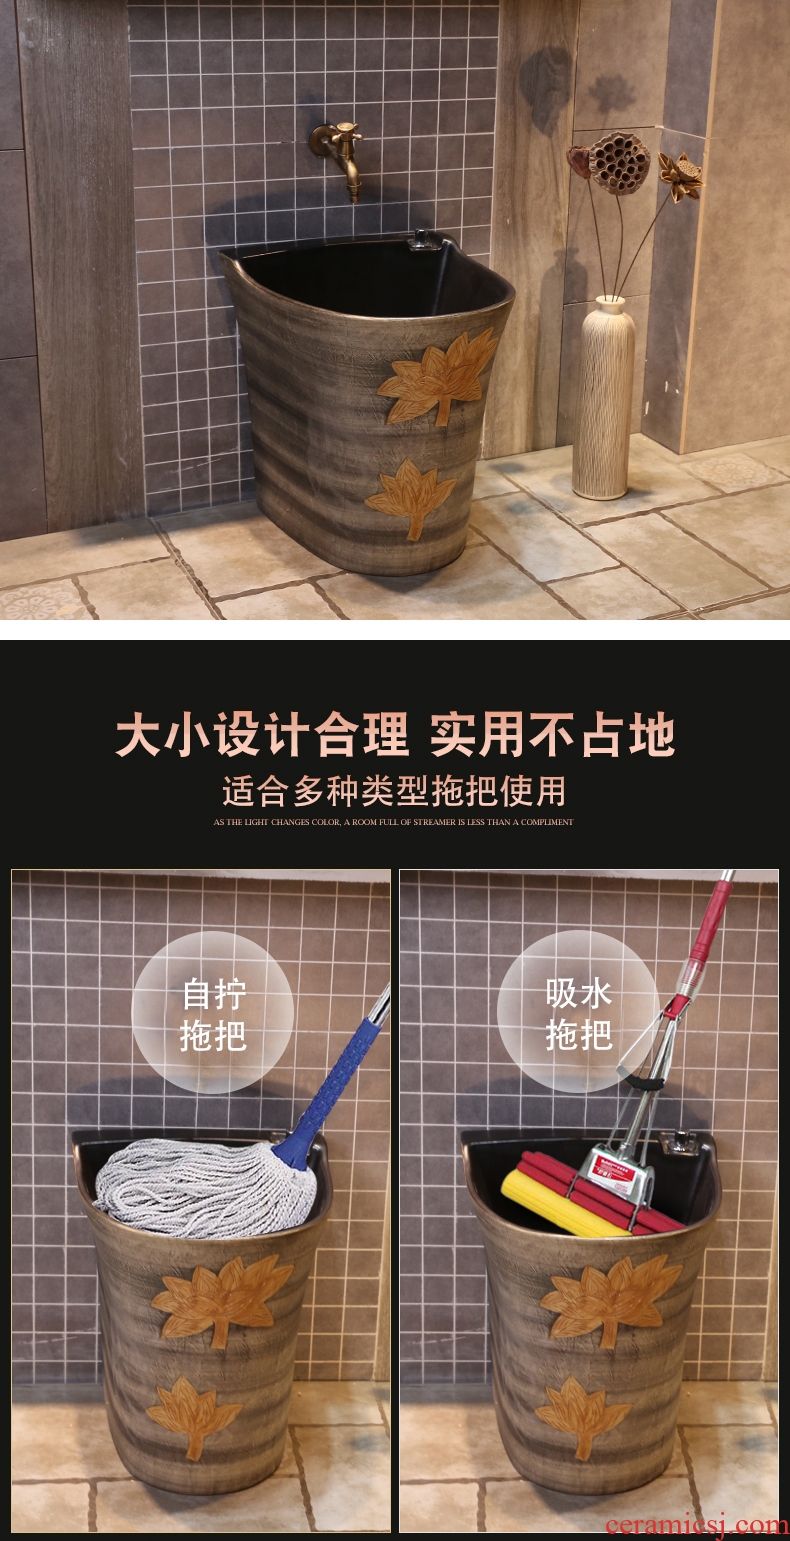 JingYan carved lotus pool of household ceramics art mop wash mop pool mop pool balcony toilet mop pool